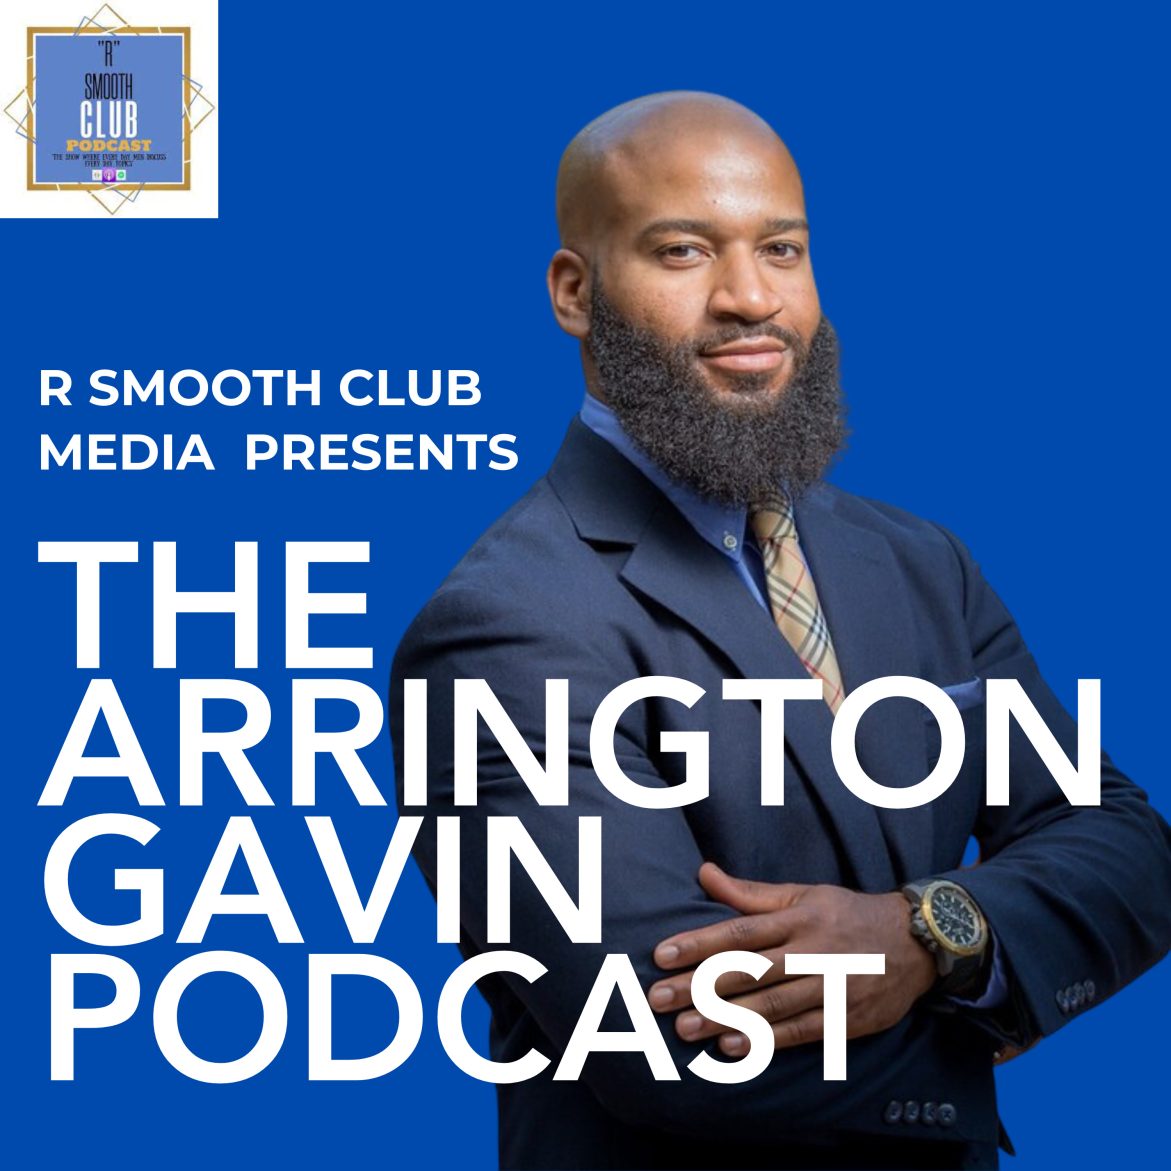 Black Podcasting - The Arrington Gavin Podcast Ep. 87 "NBA Prank Gone Wrong"